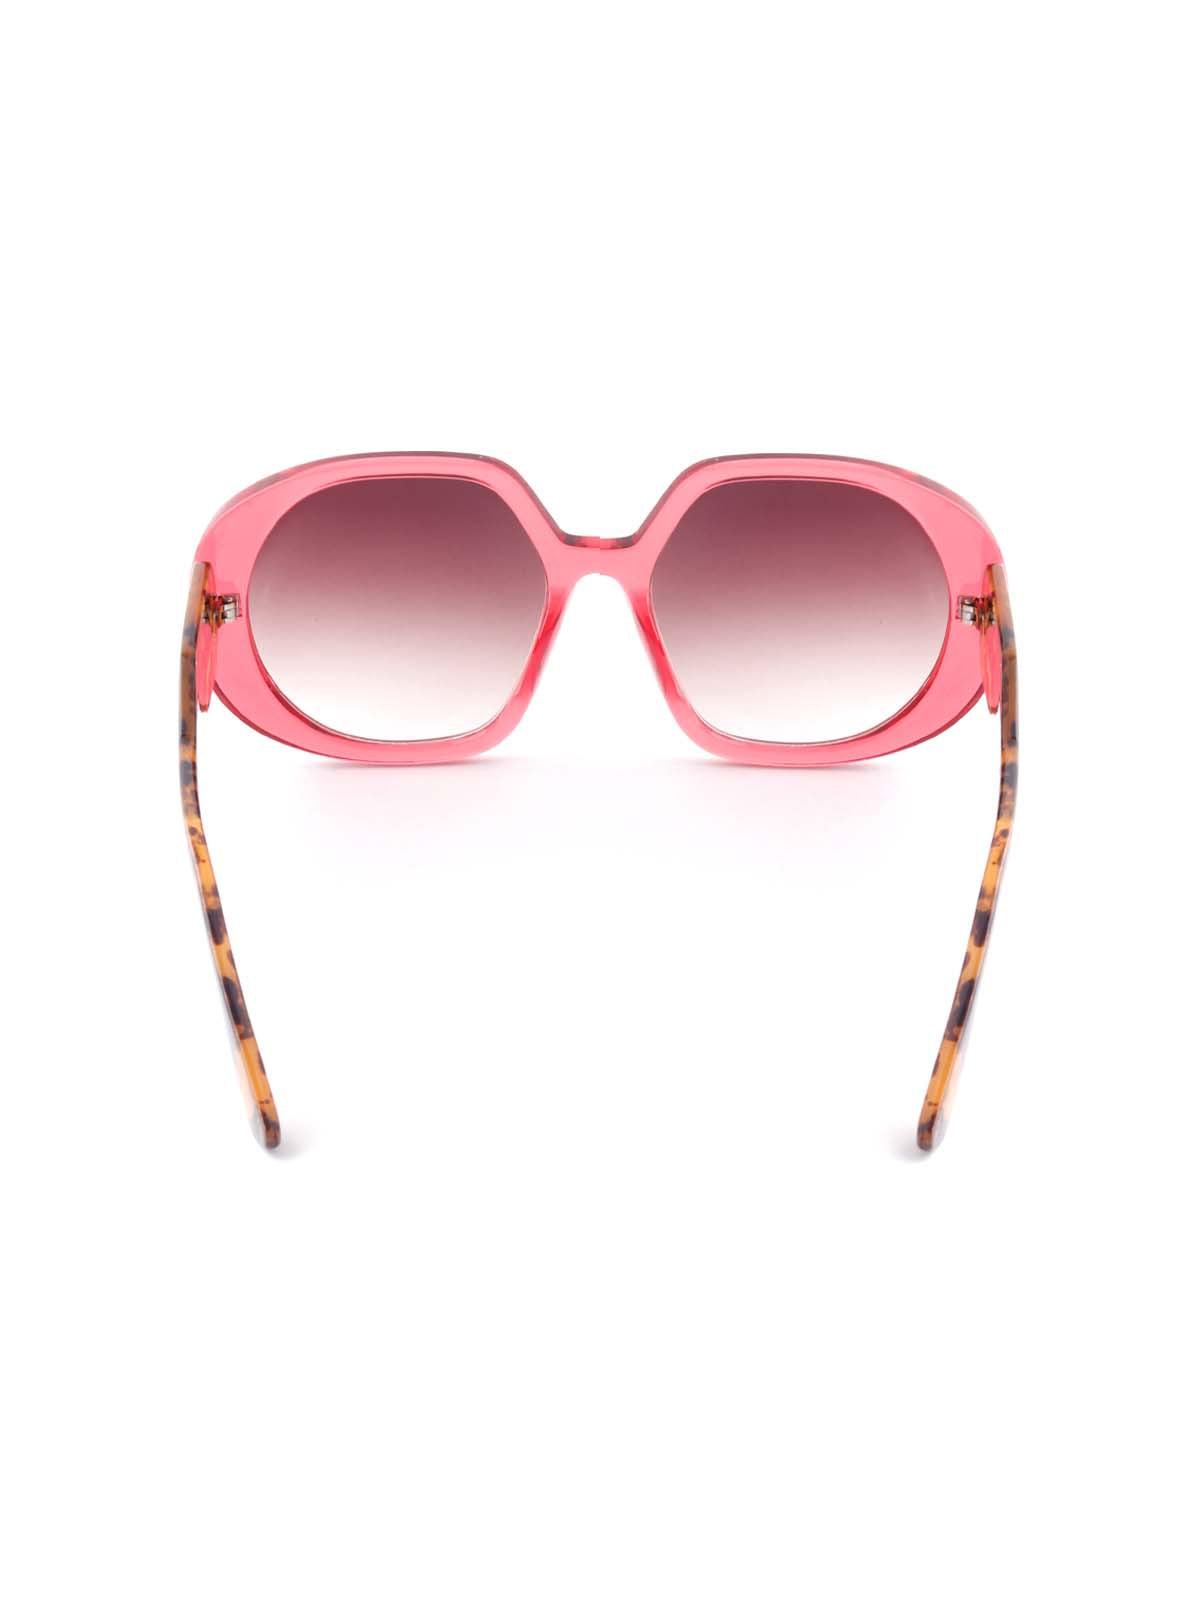 Odette Women Super Stylish Pink-Tinted Sunglasses